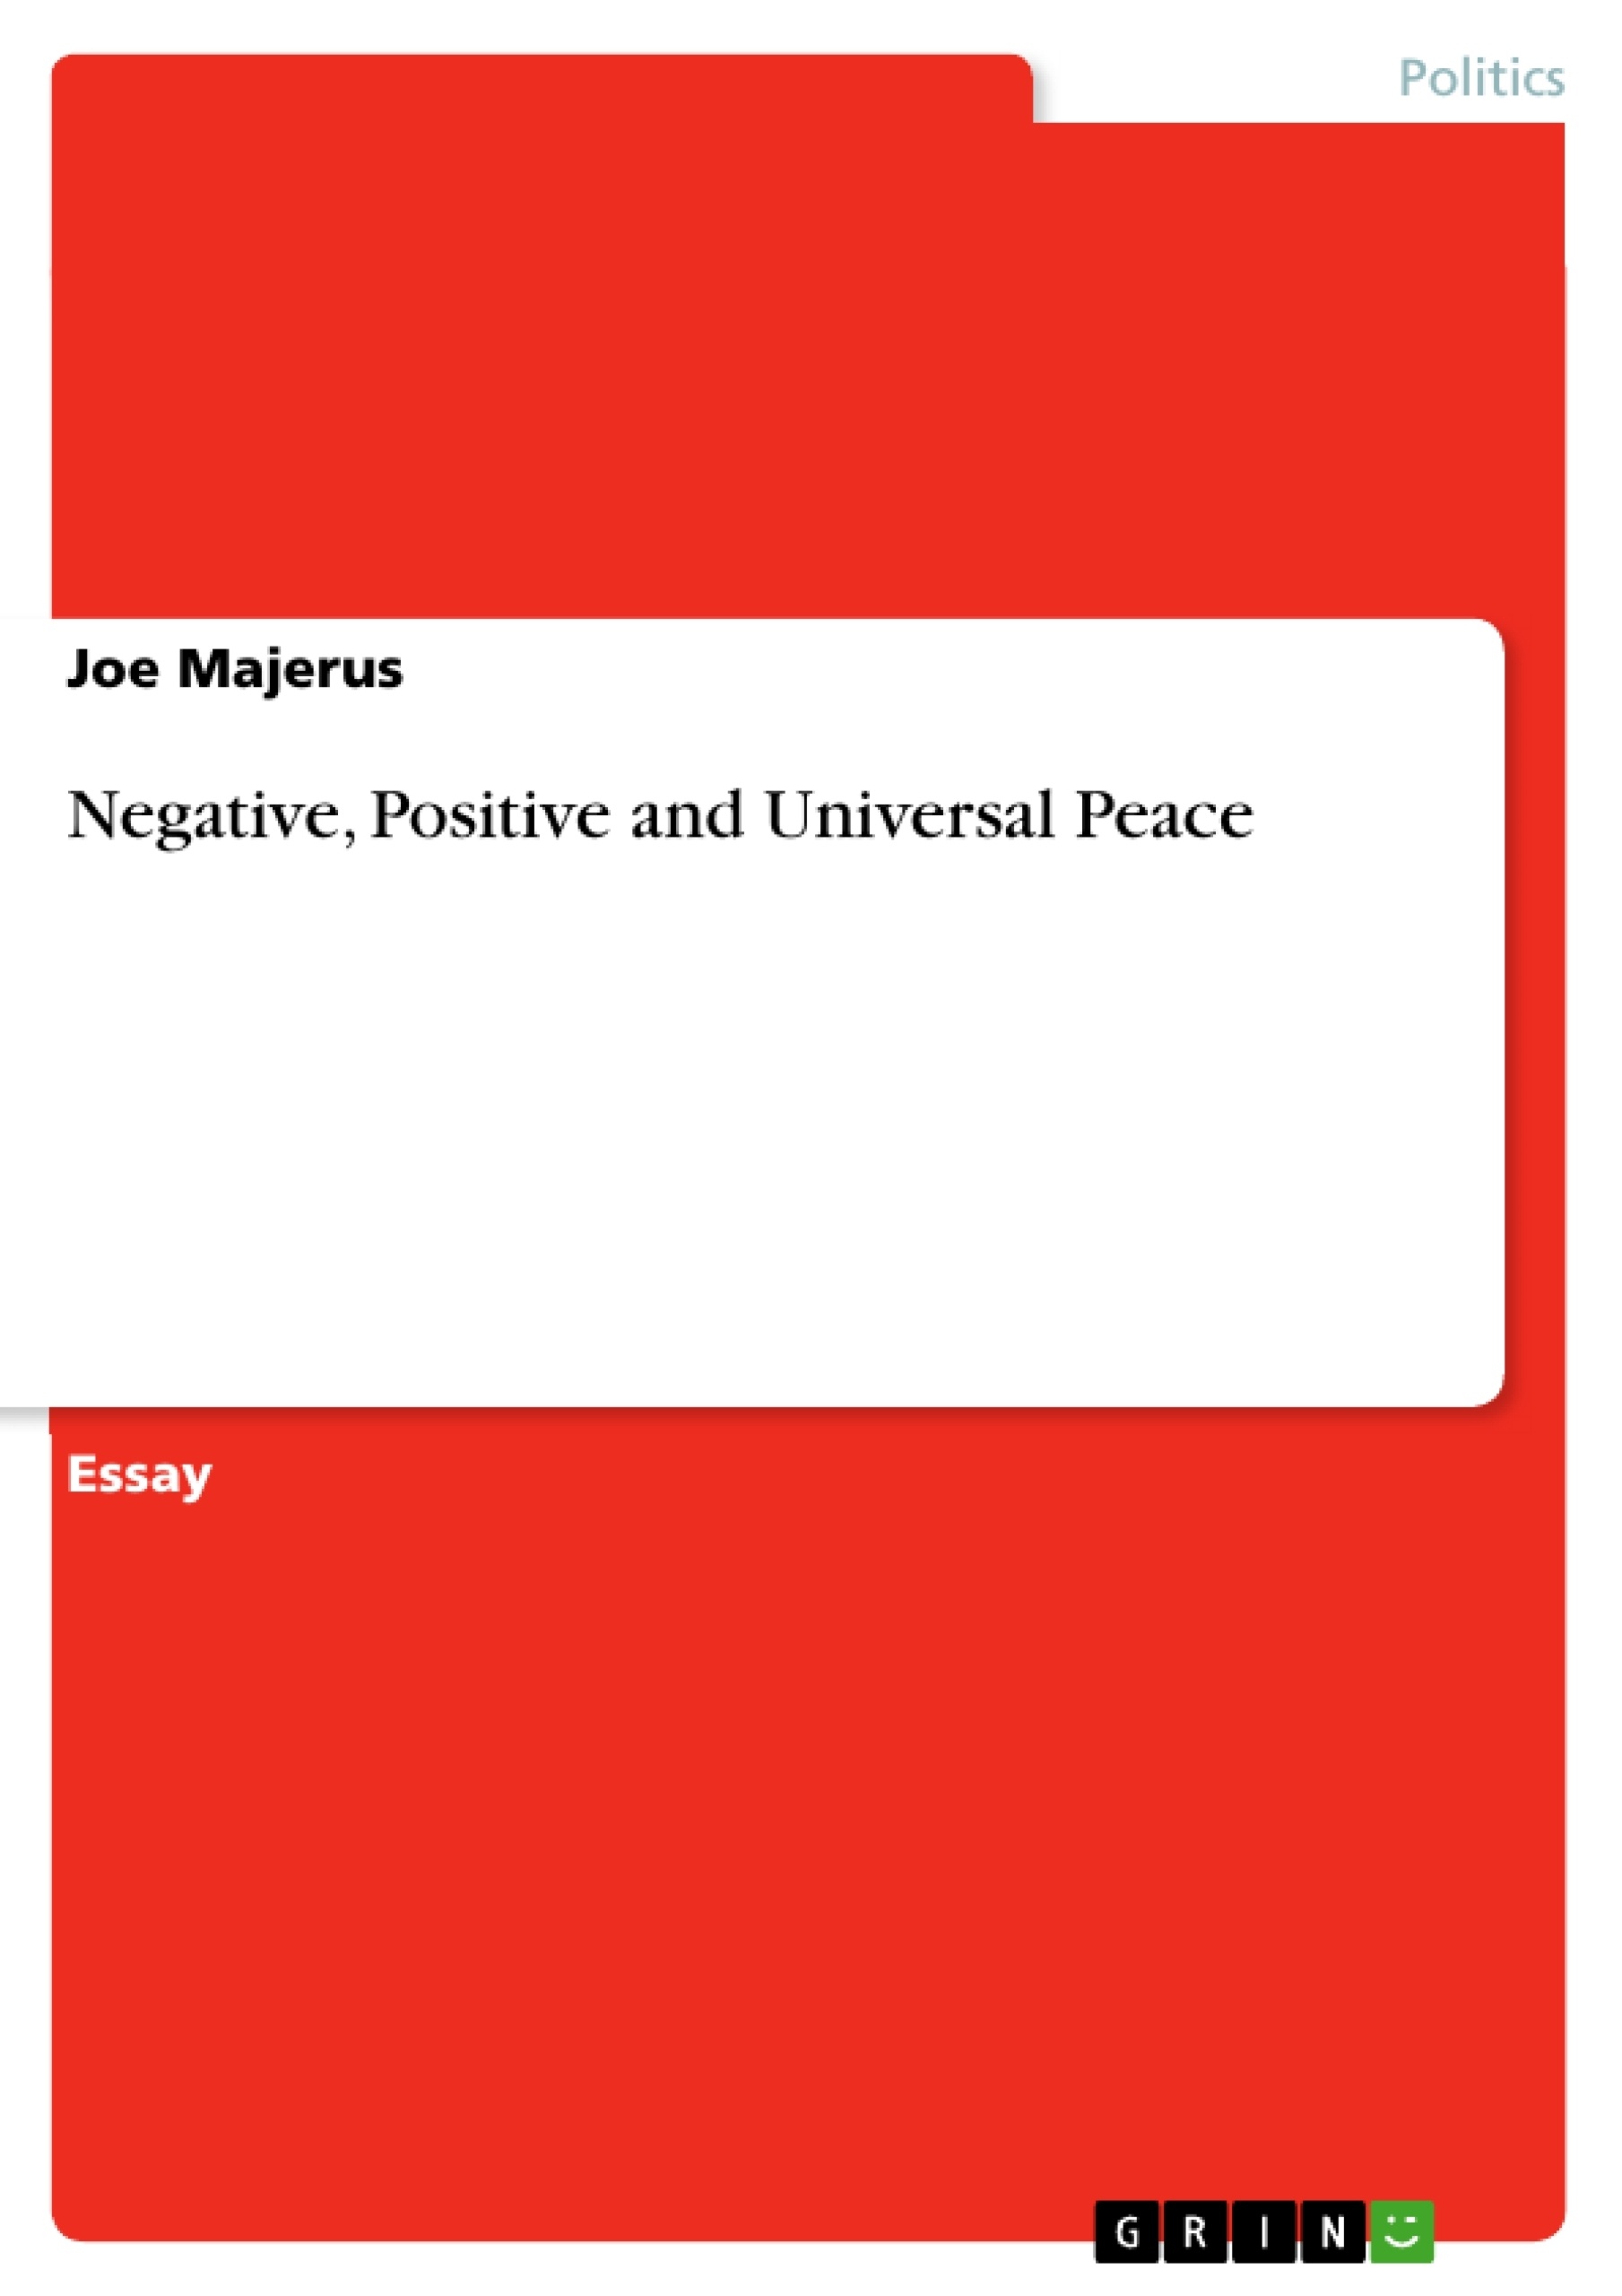 definition of positive peace